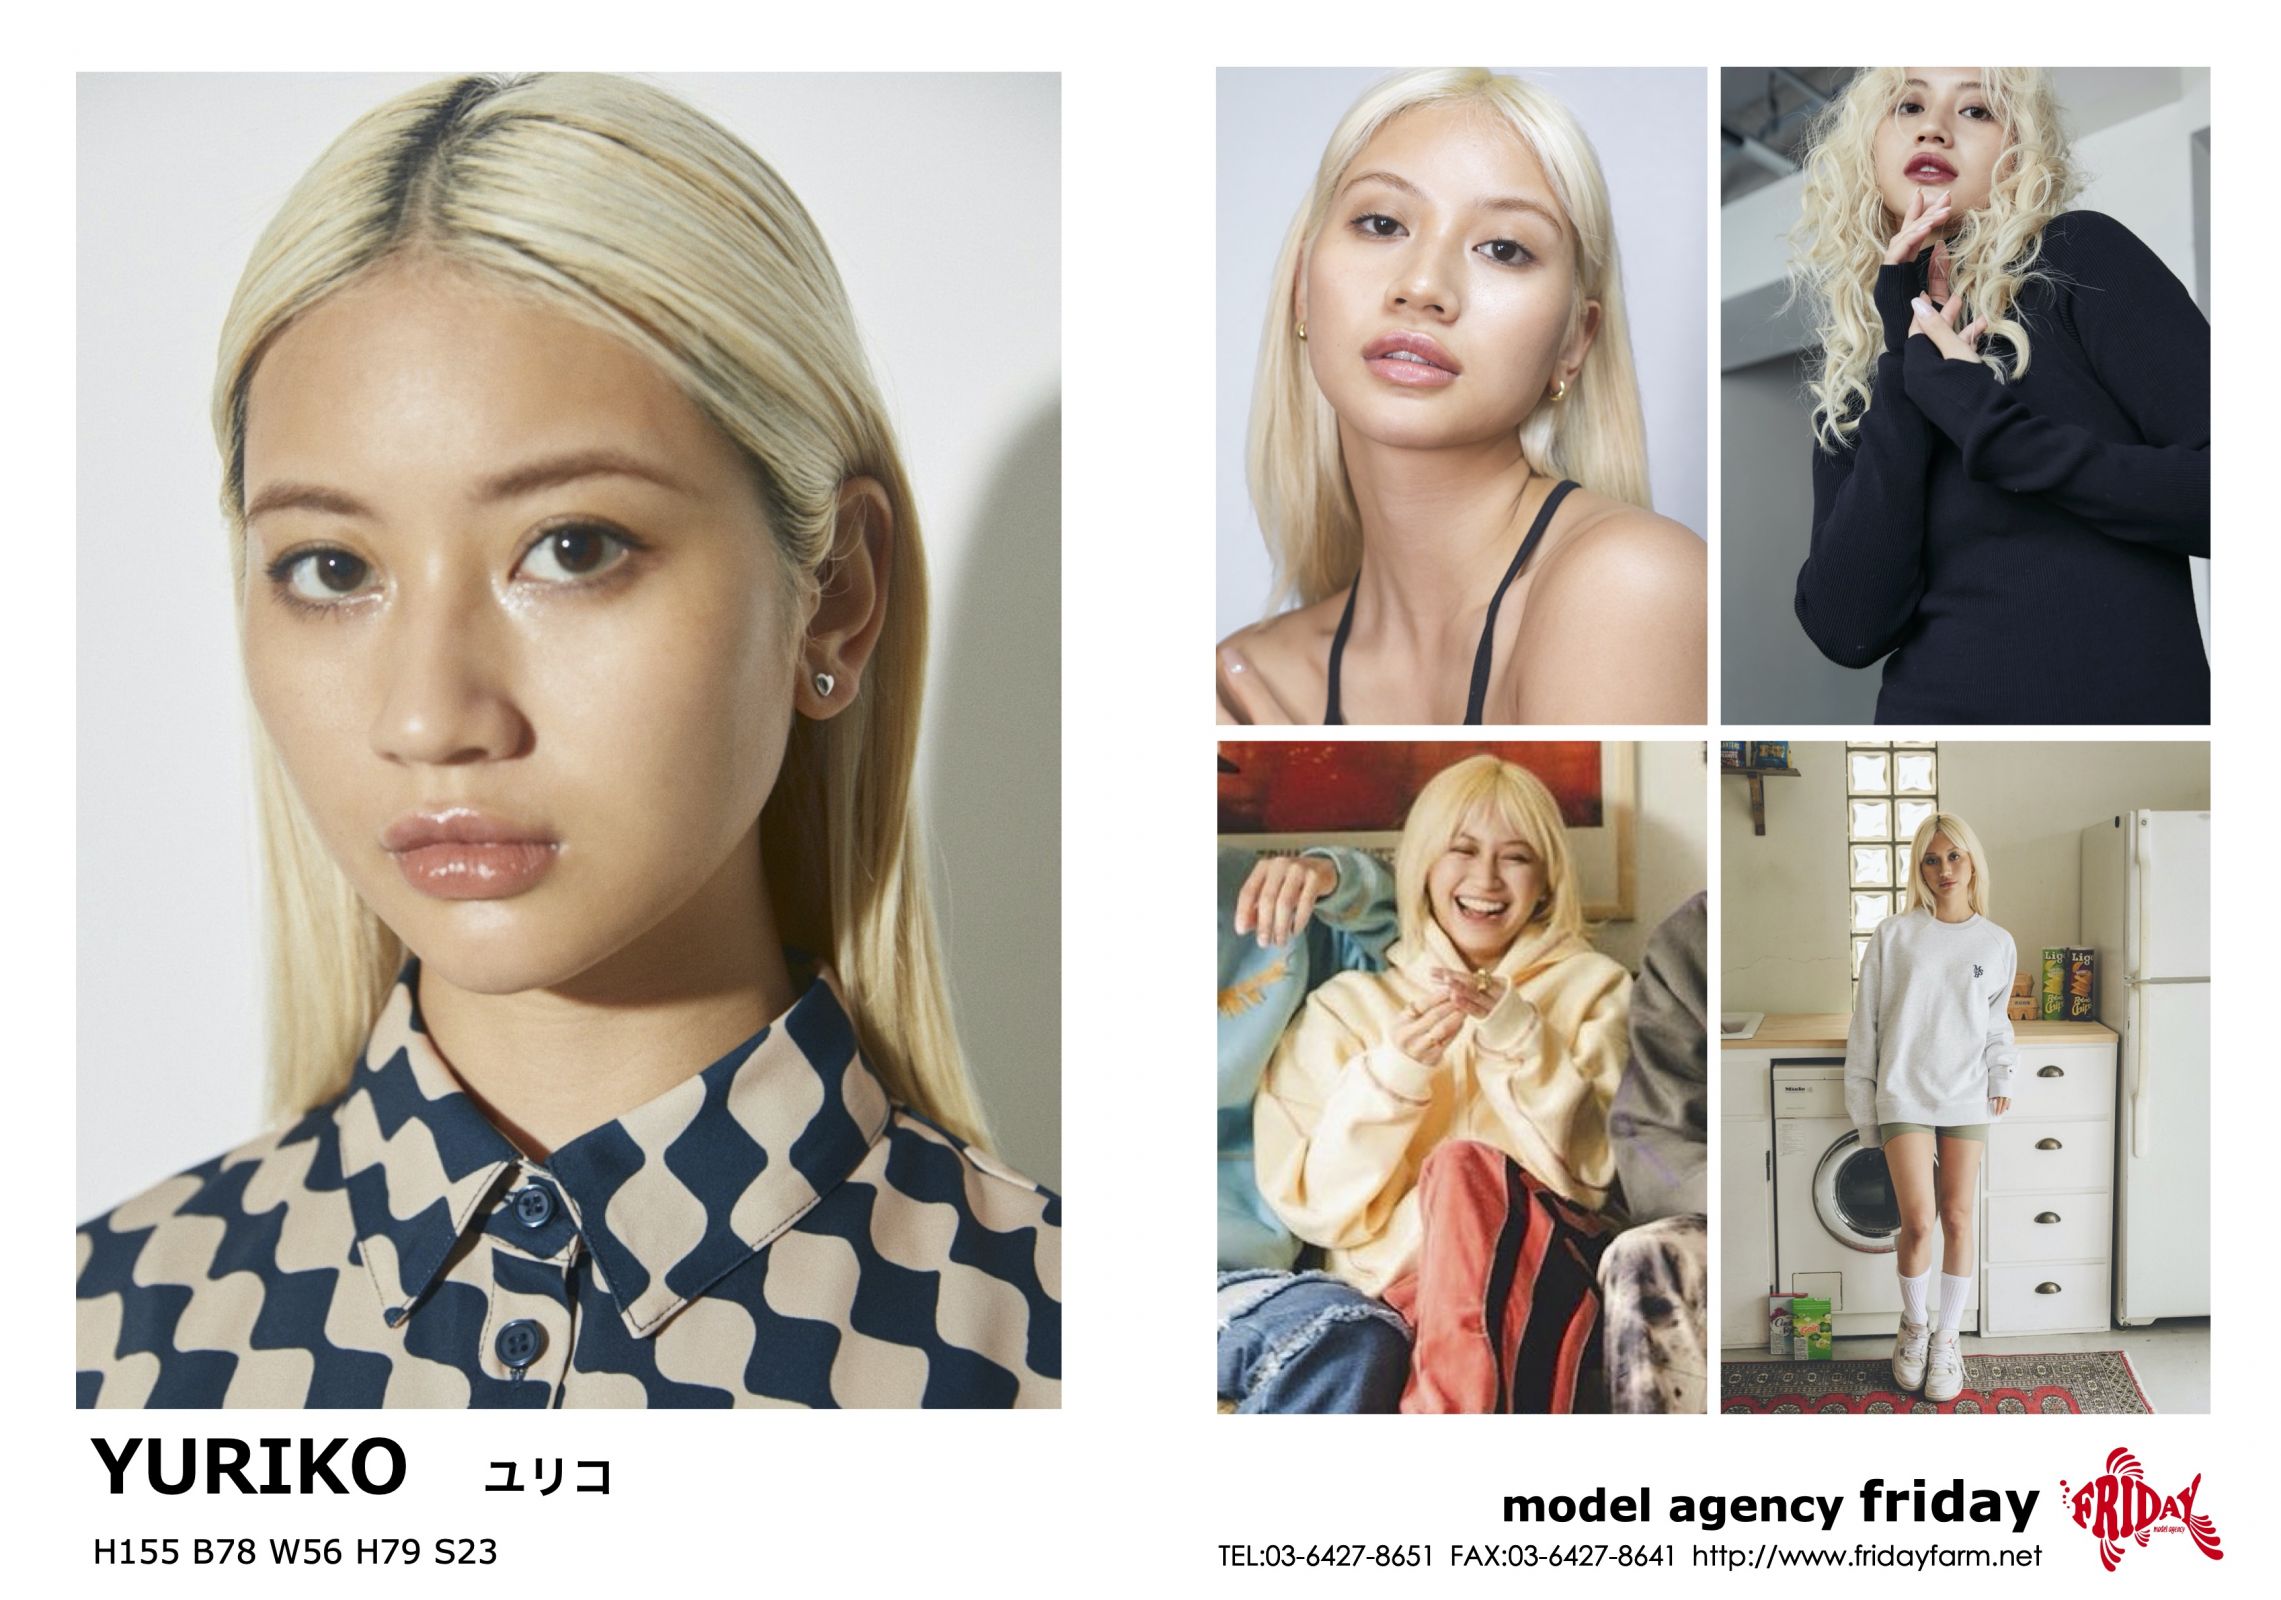 YURIKO - ユリコ | model agency friday